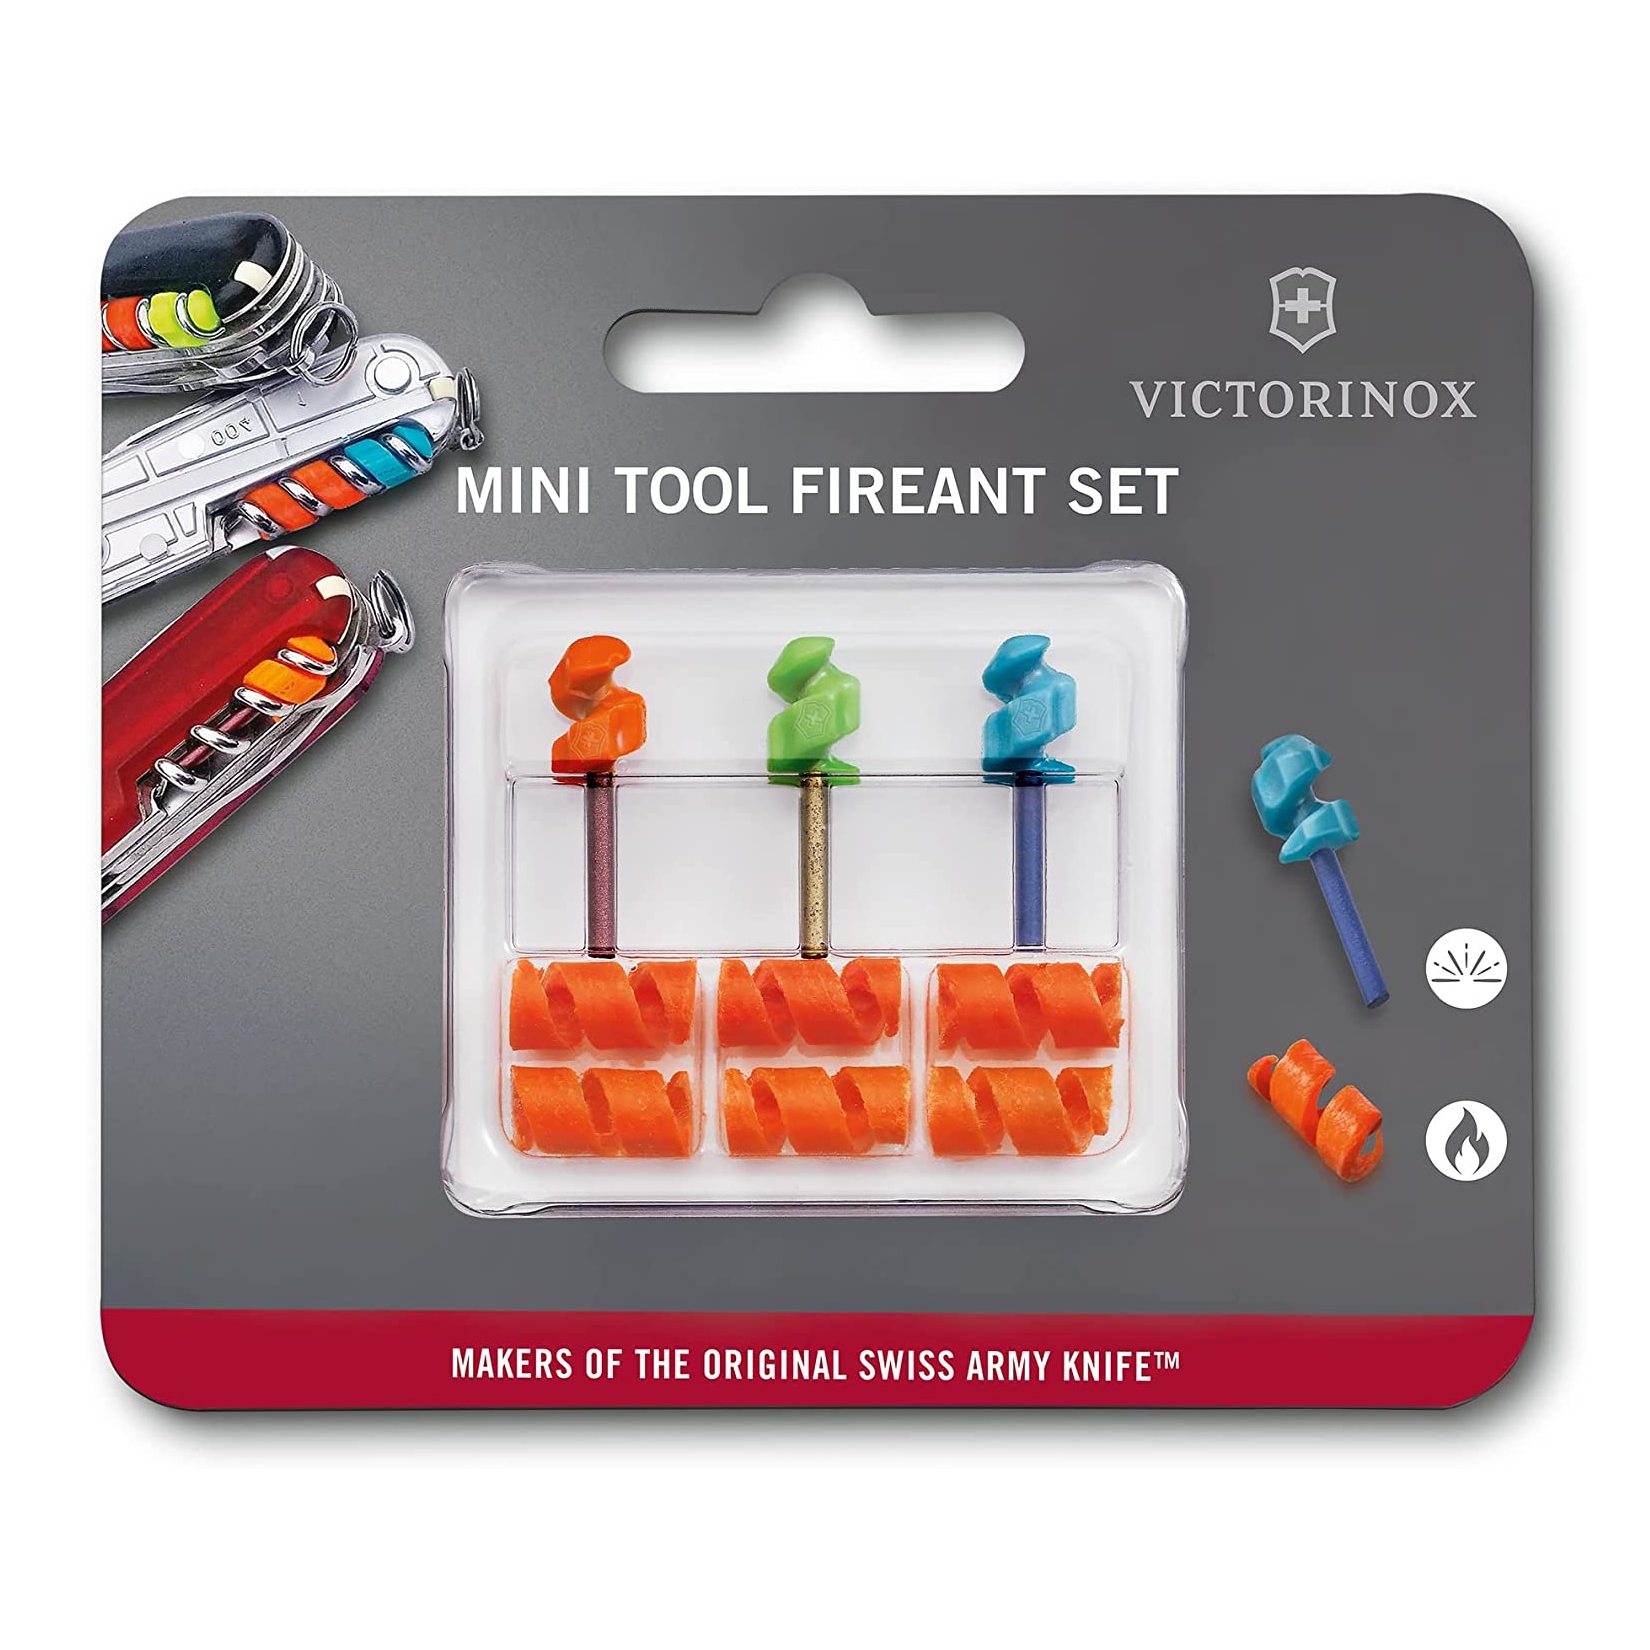 Official Victorinox Fire Ant set - Mini Fire steel and tinder kit - Fireant set - official Victorinox stockist